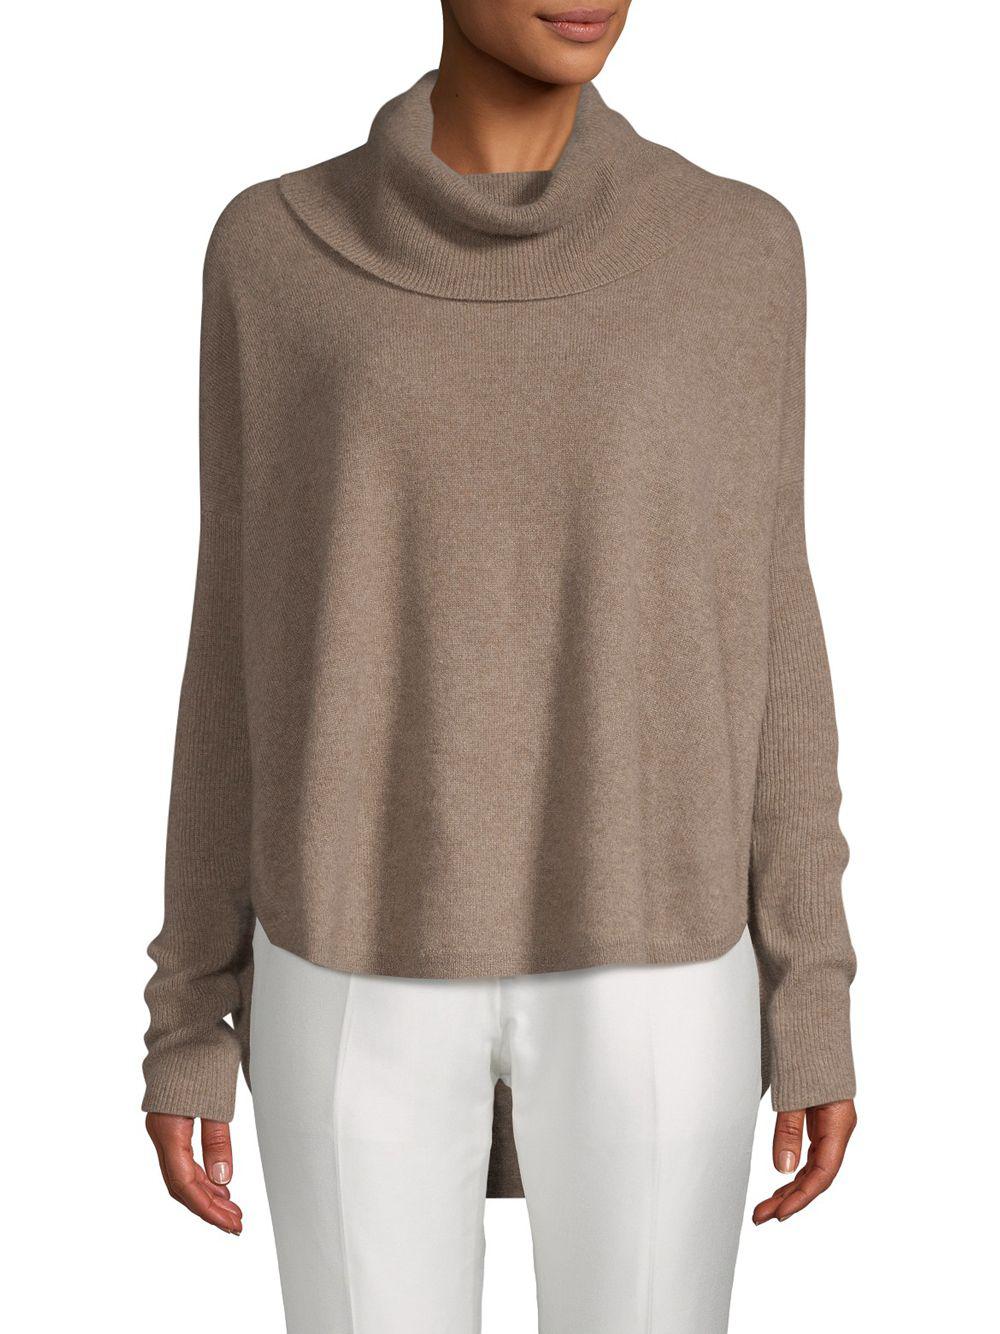 Saks Fifth Avenue Cowlneck Cashmere Sweater